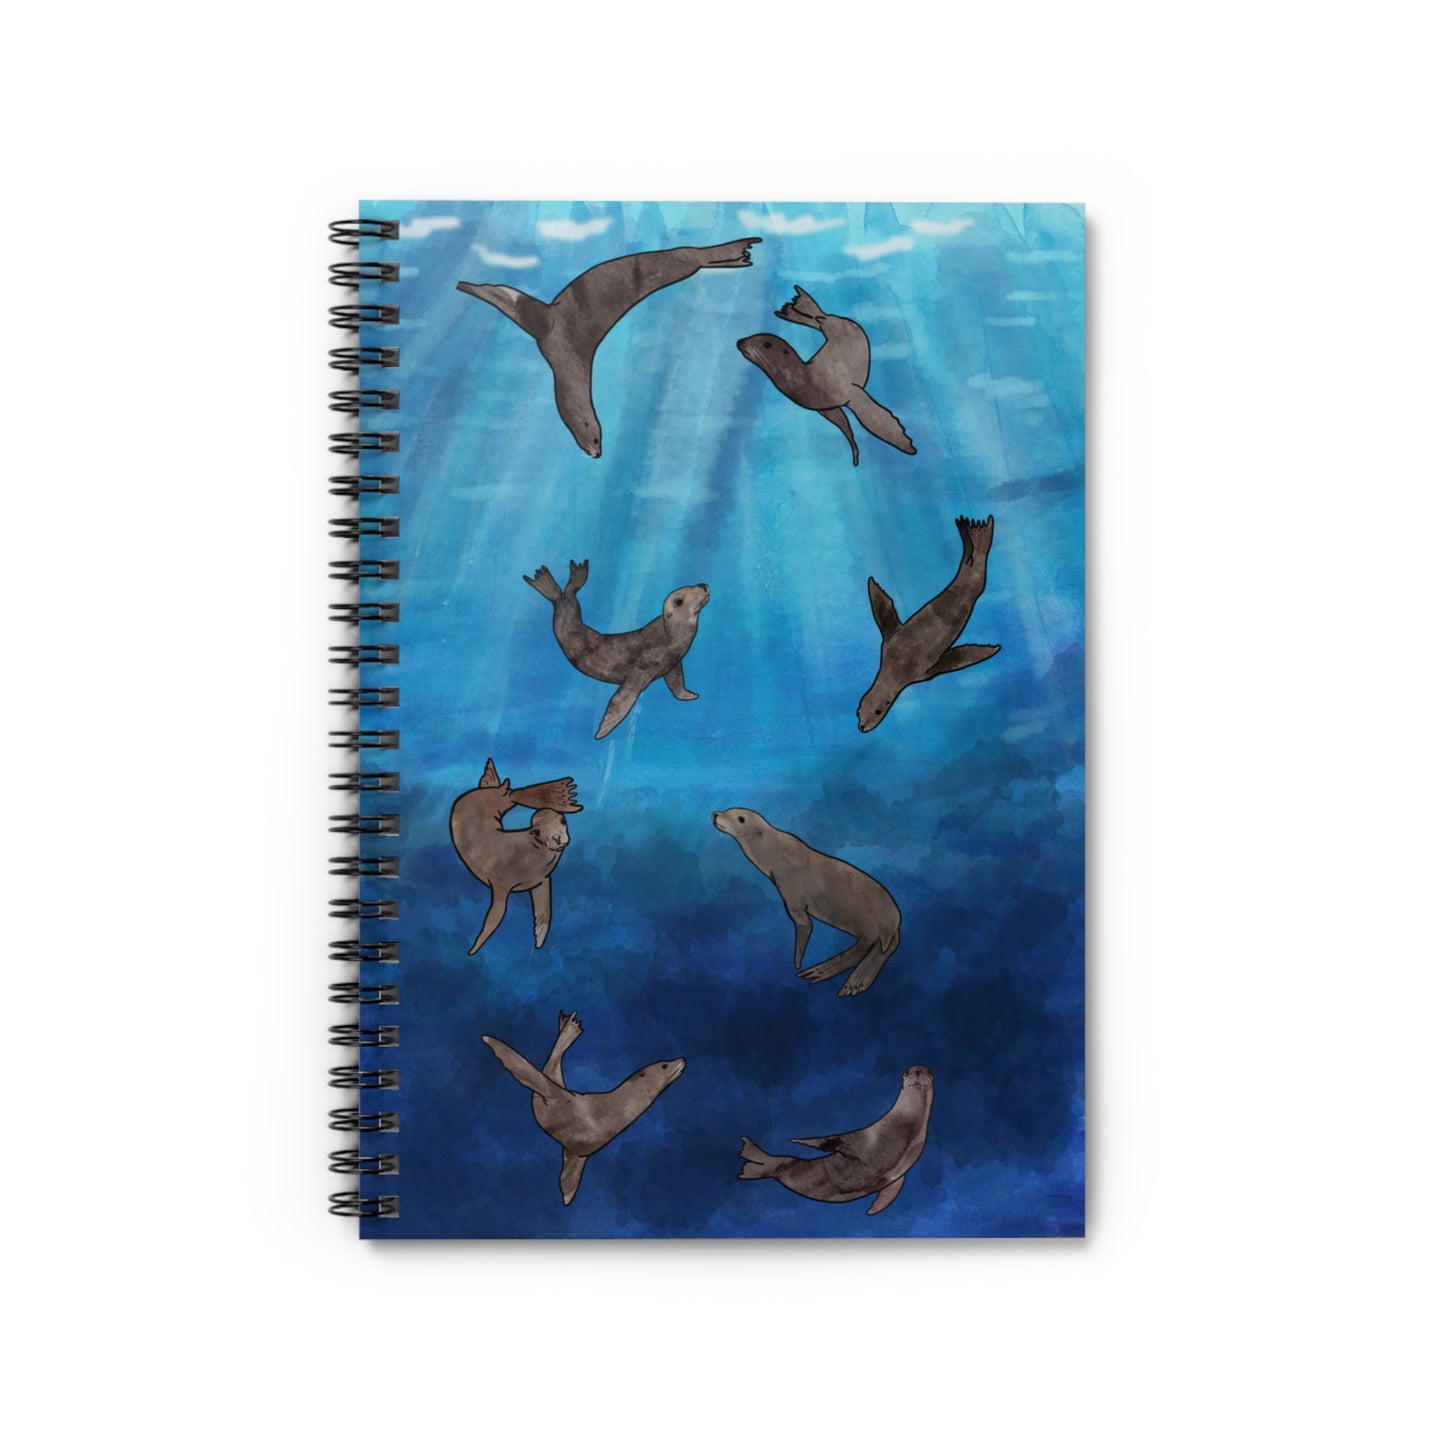 Sea Lion Spiral Notebook - Ruled Line